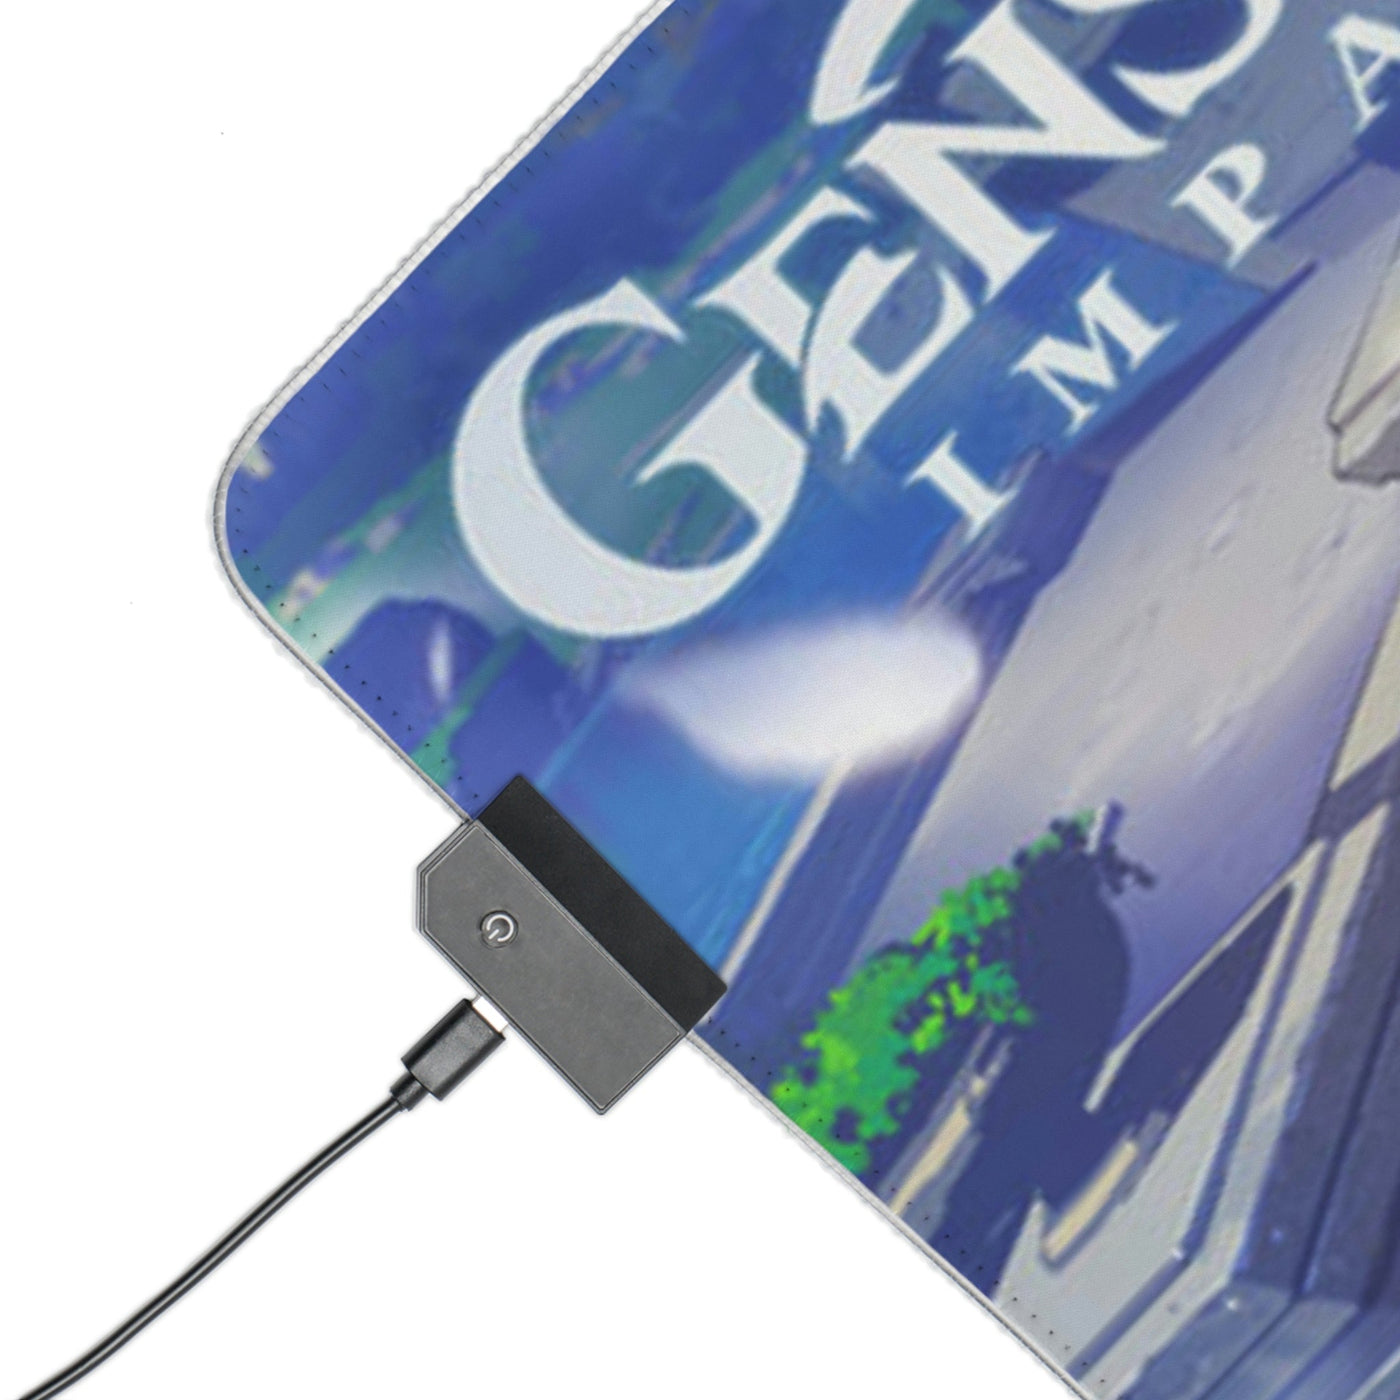 LED Gaming Mouse Pad Genshin Impact Gapo Goods